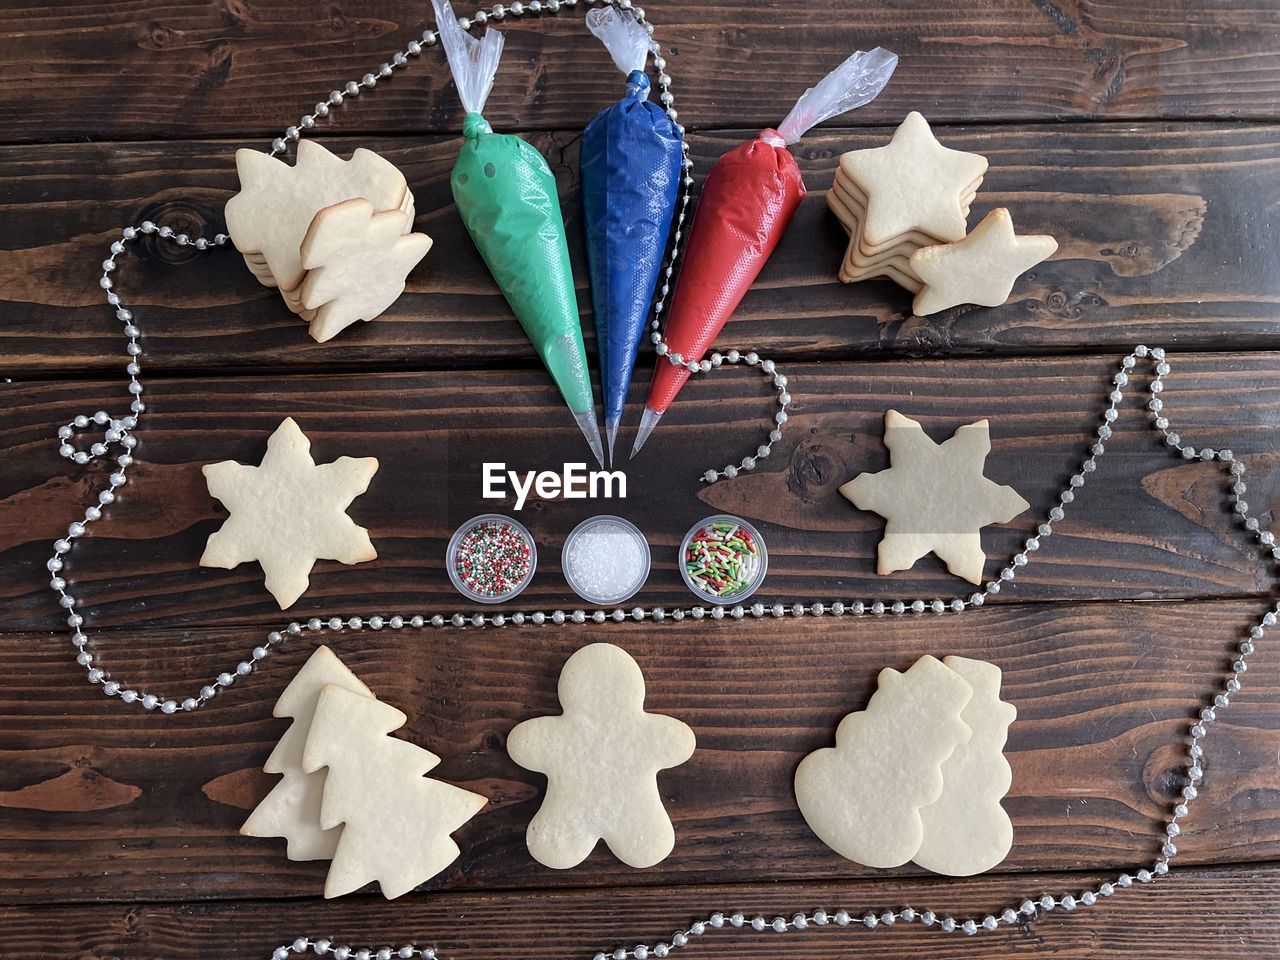 Christmas sugar cookie decorating kit